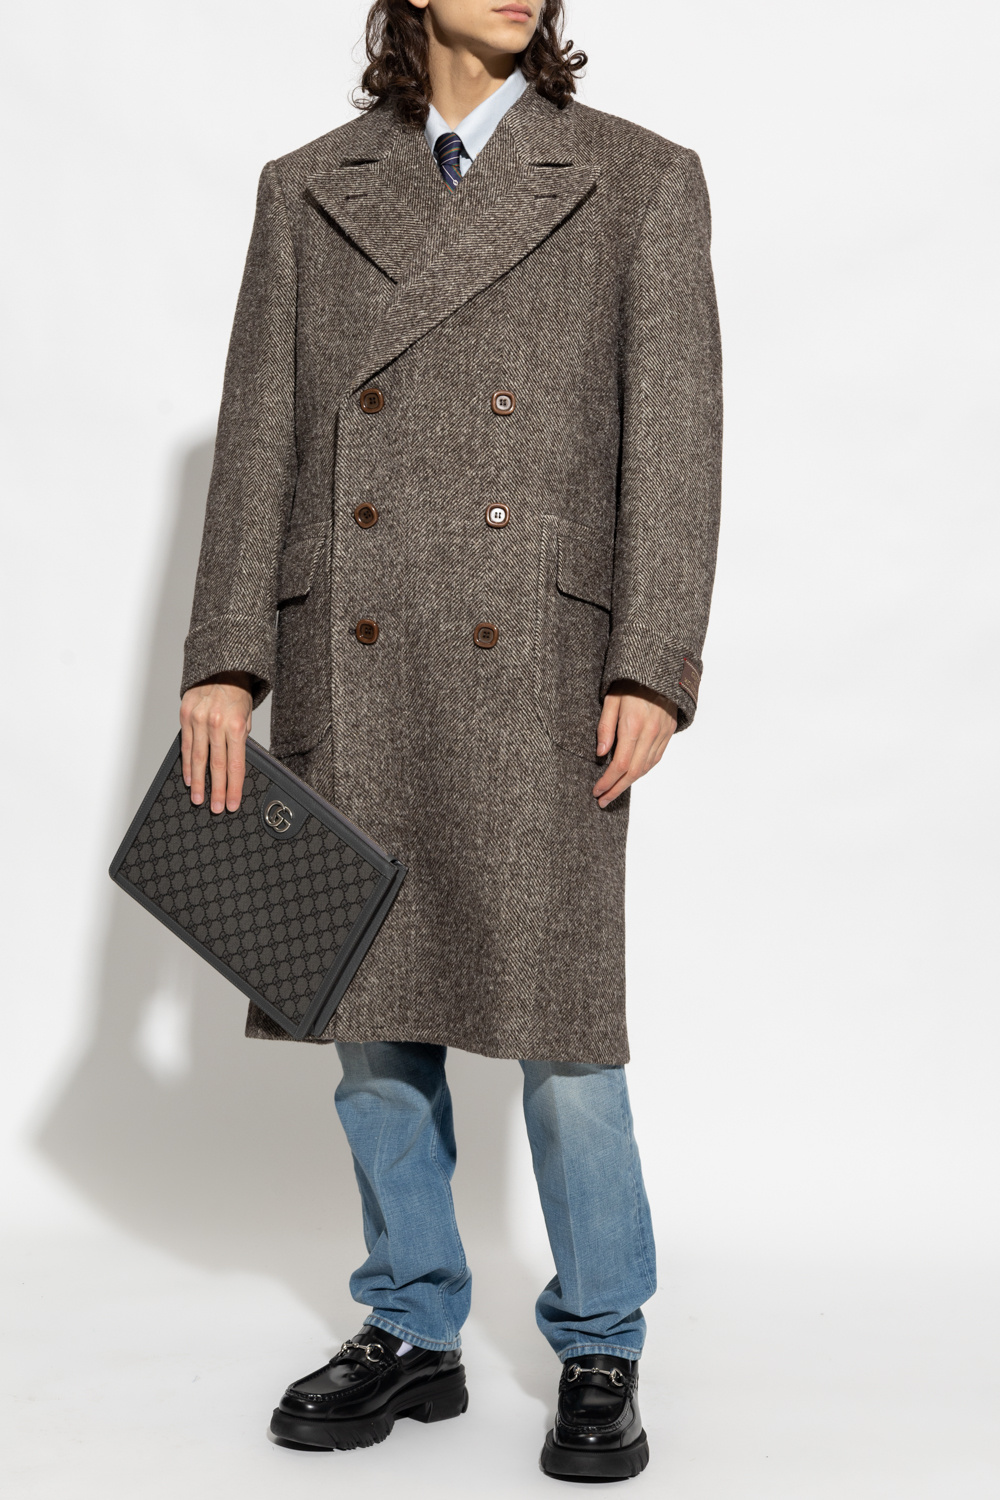 Gucci Wool coat | Men's Clothing Vitkac